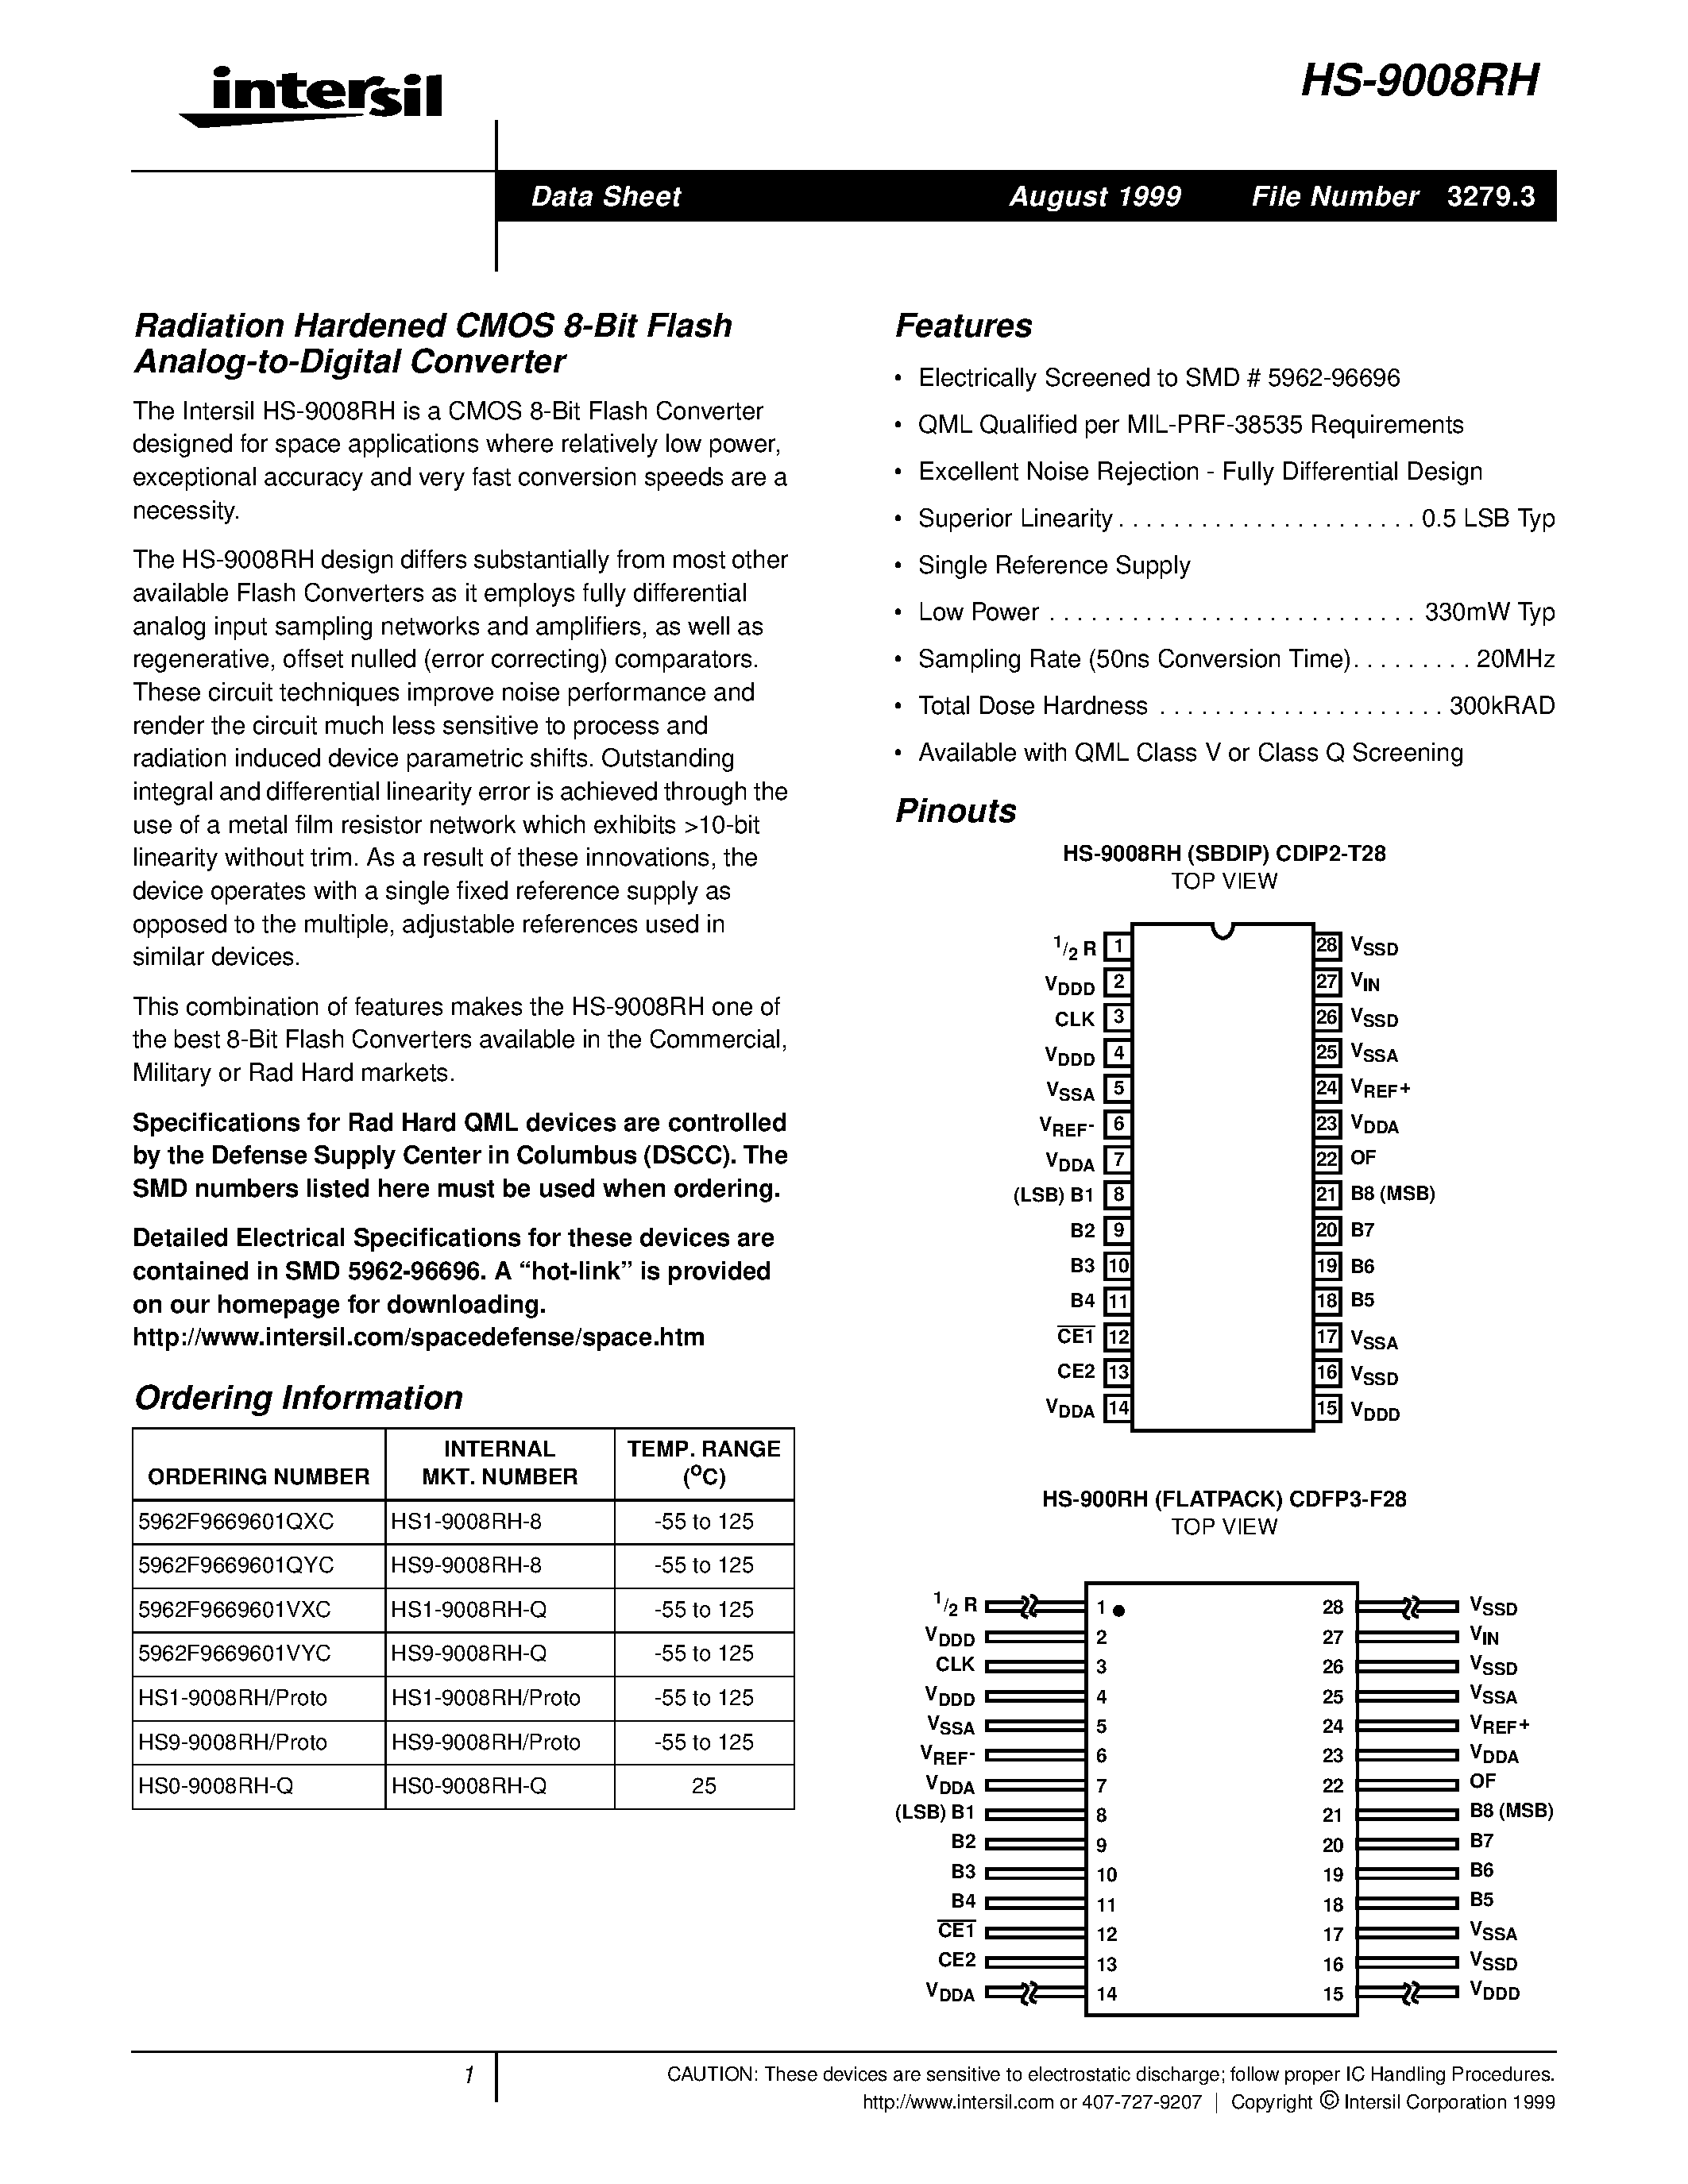 Datasheet HS9-9008RH-Q - Radiation Hardened CMOS 8-Bit Flash Analog-to-Digital Converter page 1